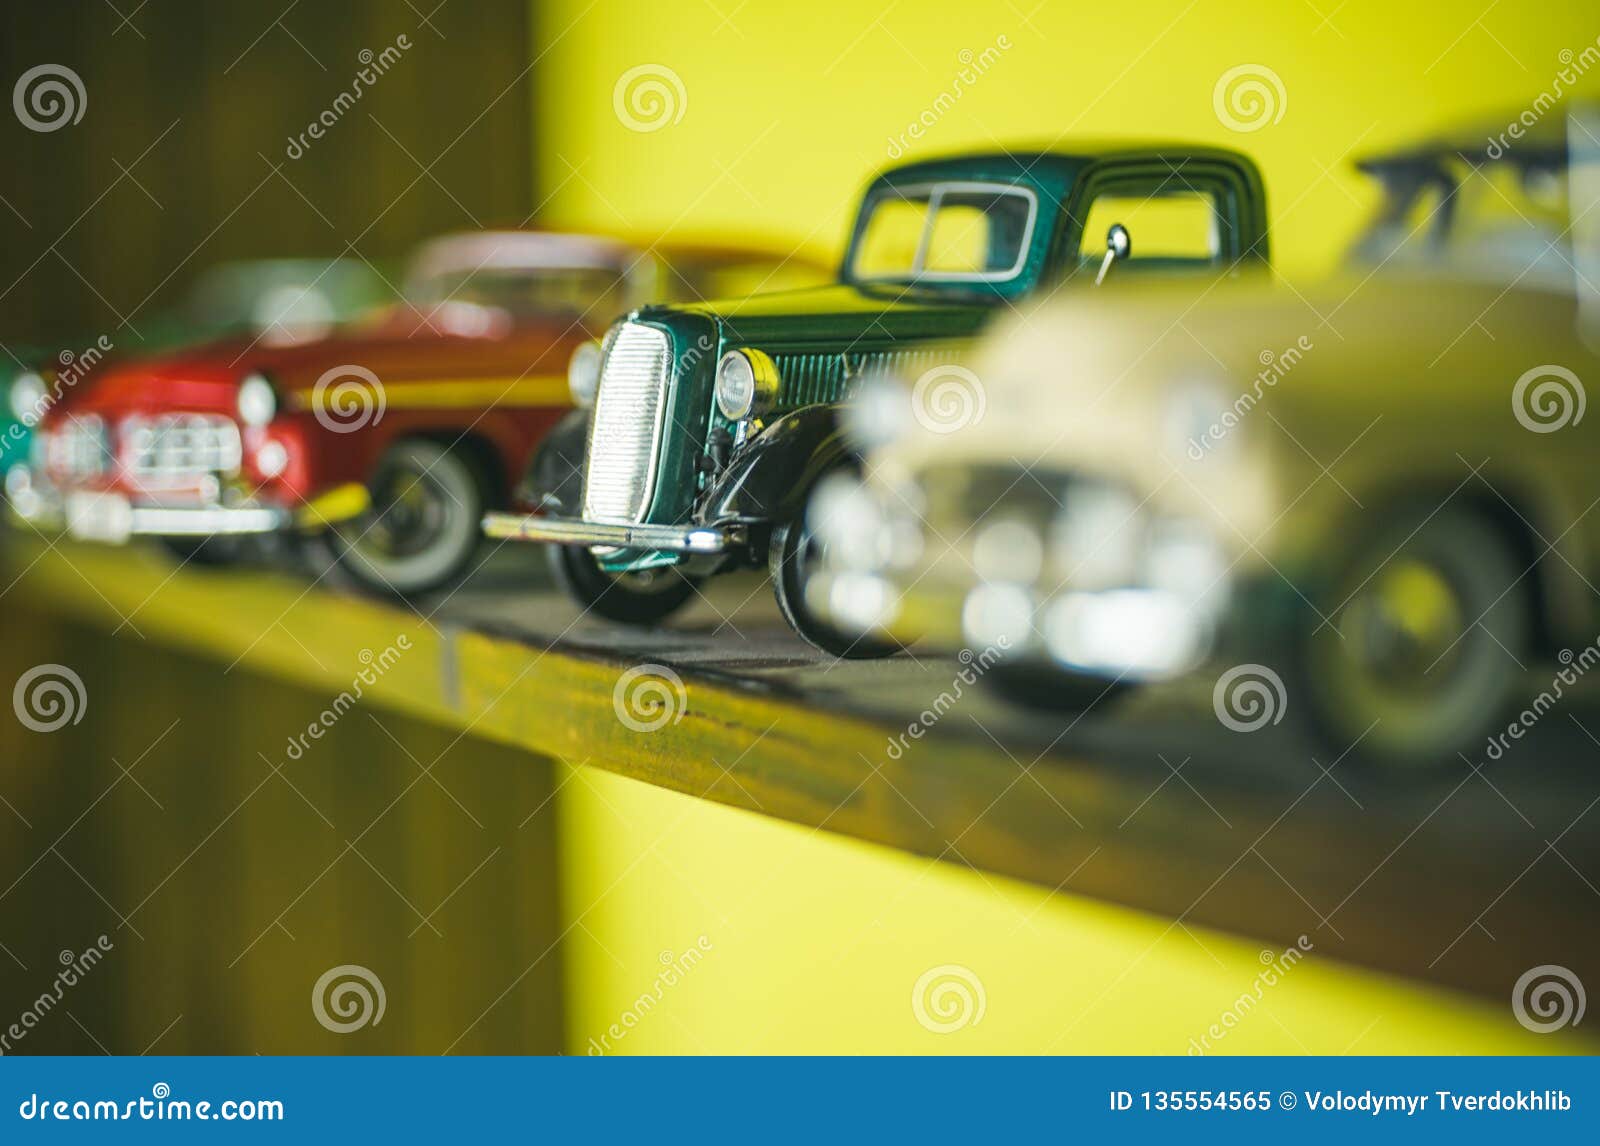 https://thumbs.dreamstime.com/z/parecen-los-coches-reales-veh%C3%ADculos-modelo-cl%C3%A1sicos-o-del-juguete-colecci%C3%B3n-miniatura-de-autom%C3%B3viles-modelos-retros-coche-135554565.jpg